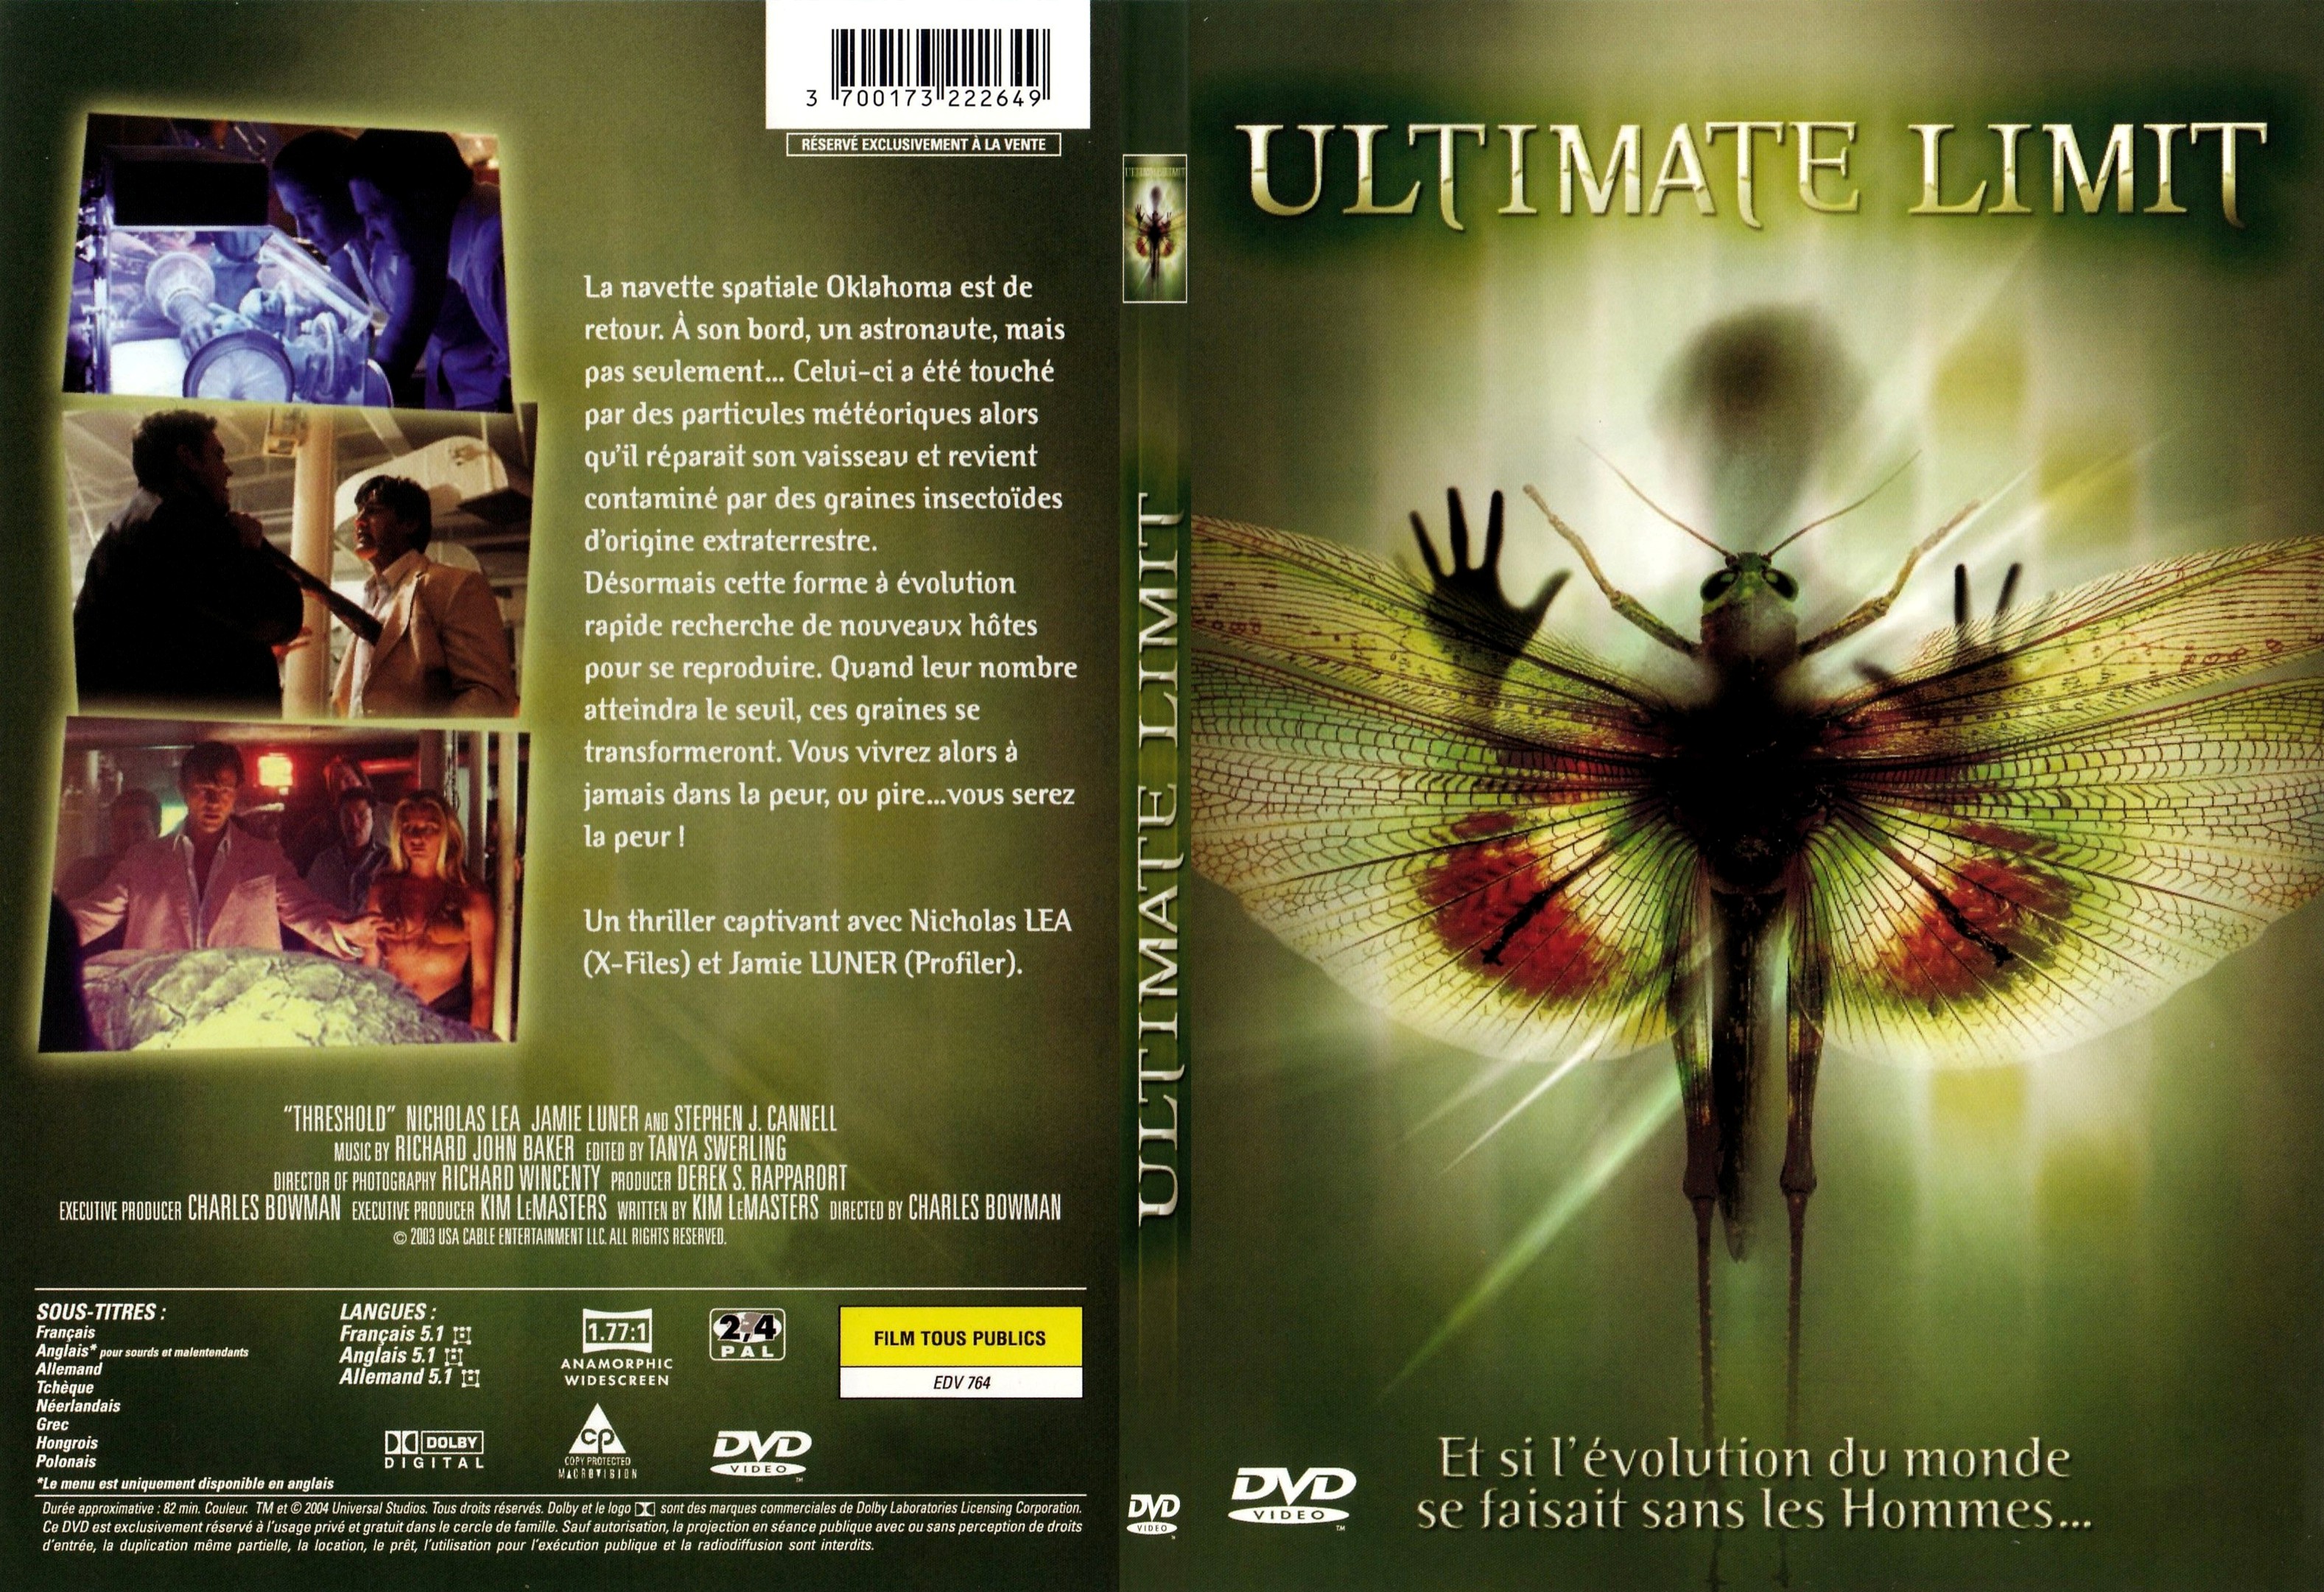 Jaquette DVD Ultimate limit - SLIM